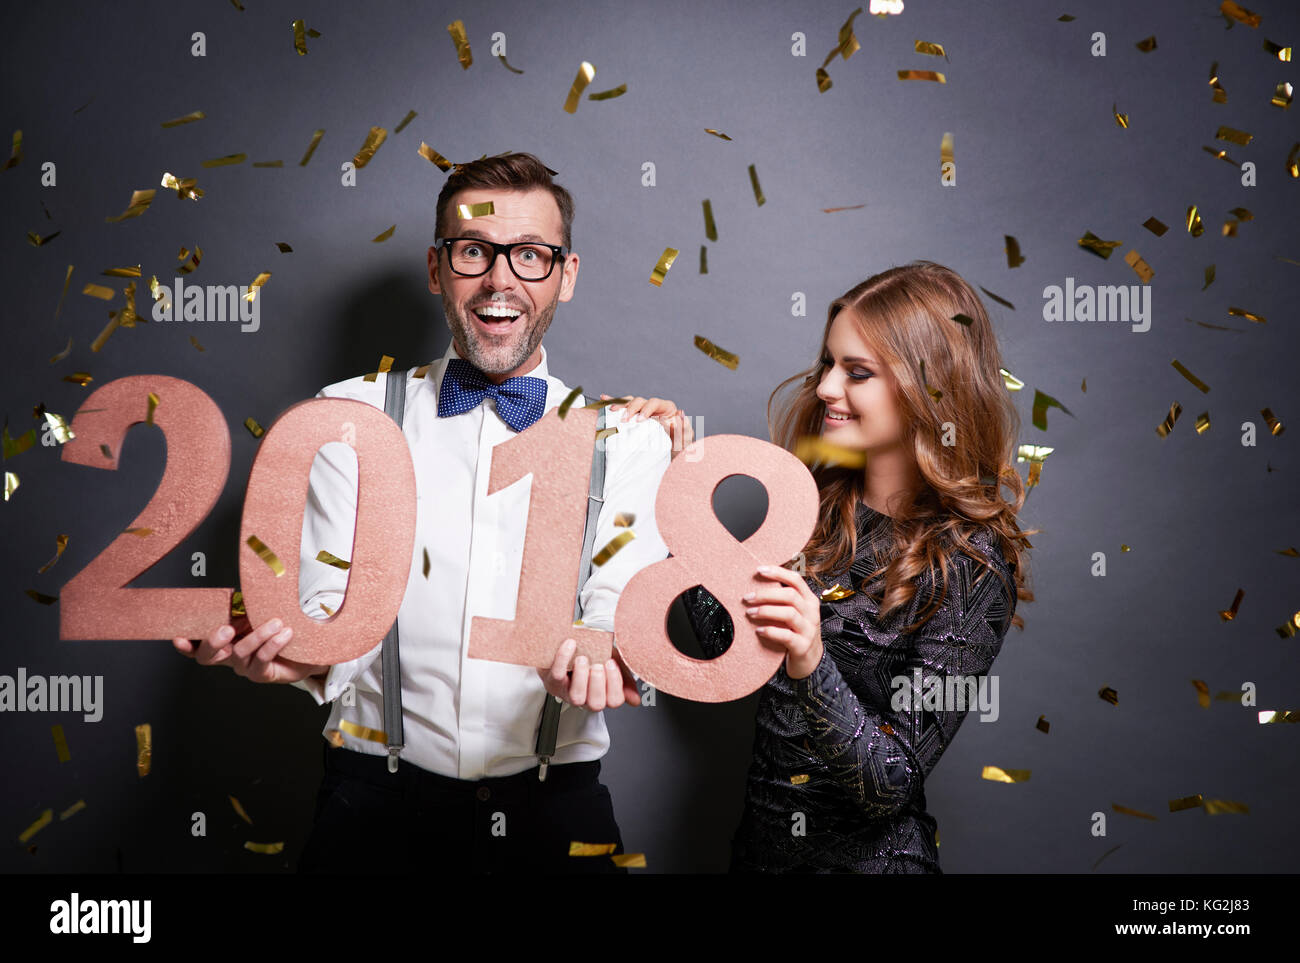 Celebrating new year in studio shot Stock Photo